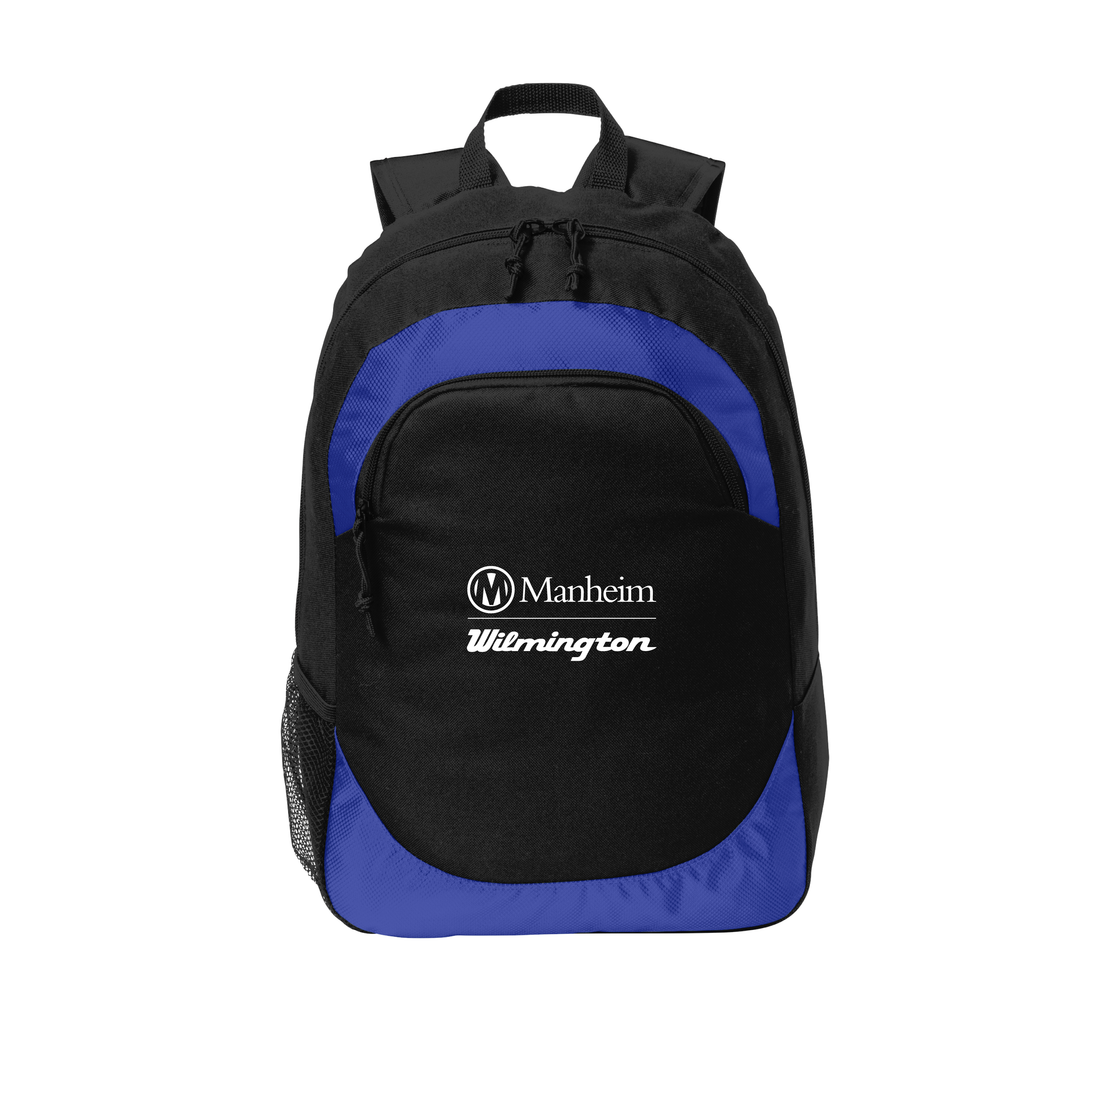 Manheim Wilmington Backpack